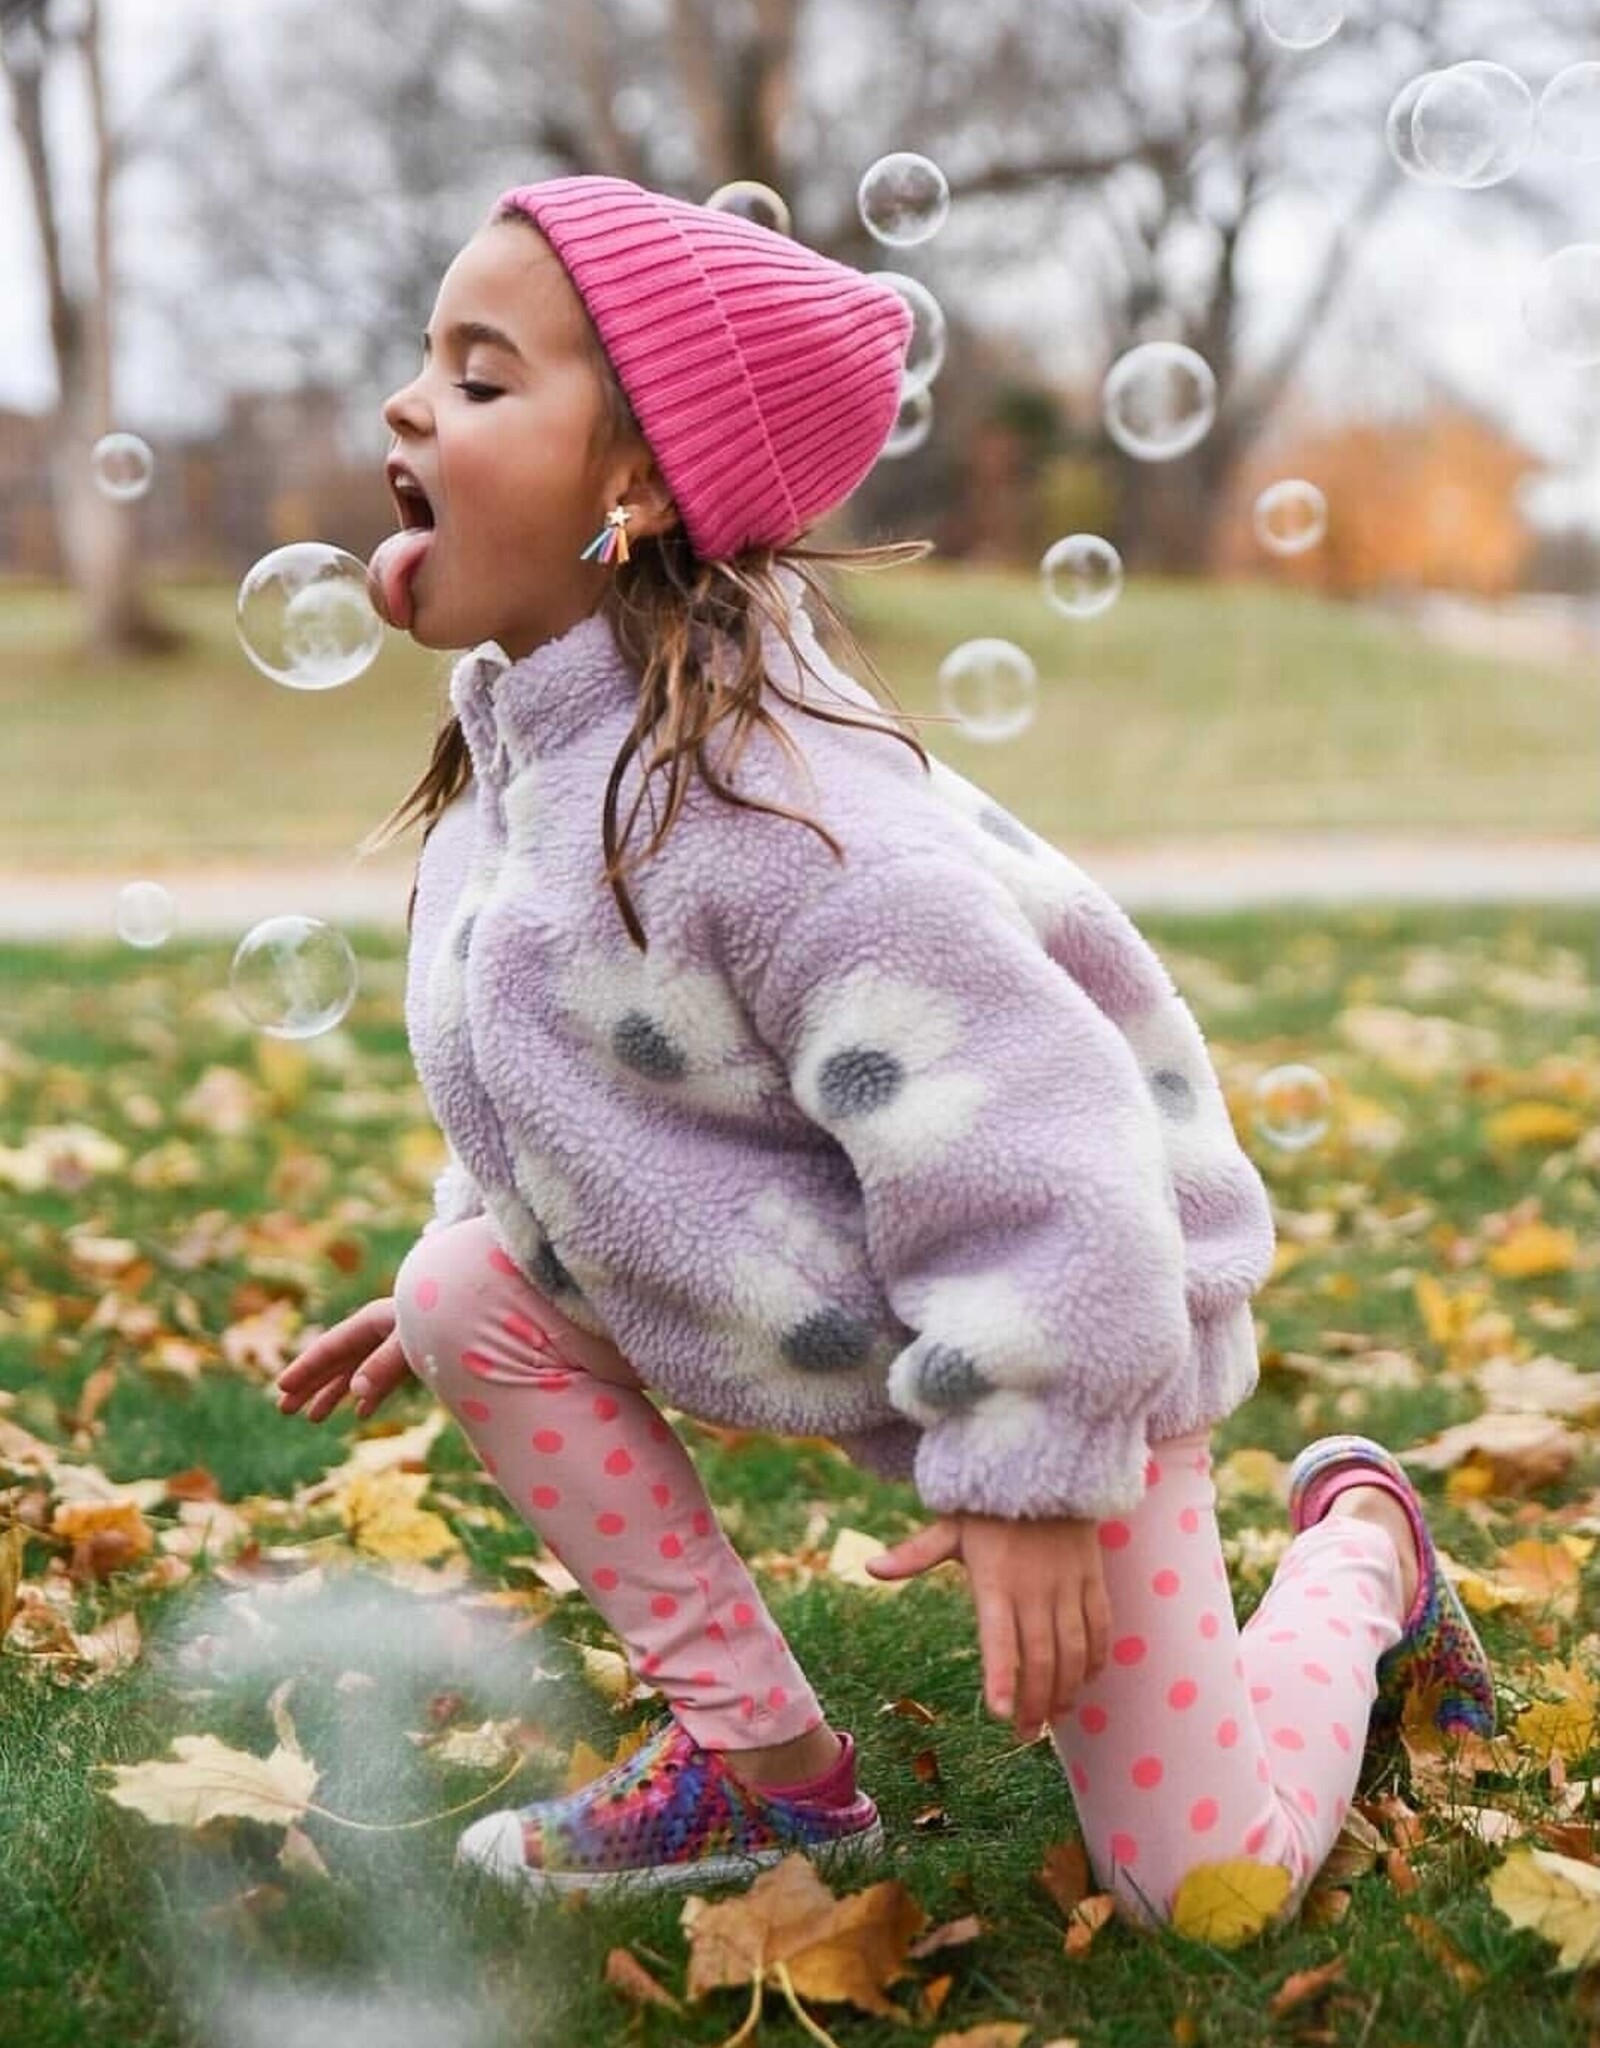 Toysmith Bubble Lick Cotton Candy Bubbles